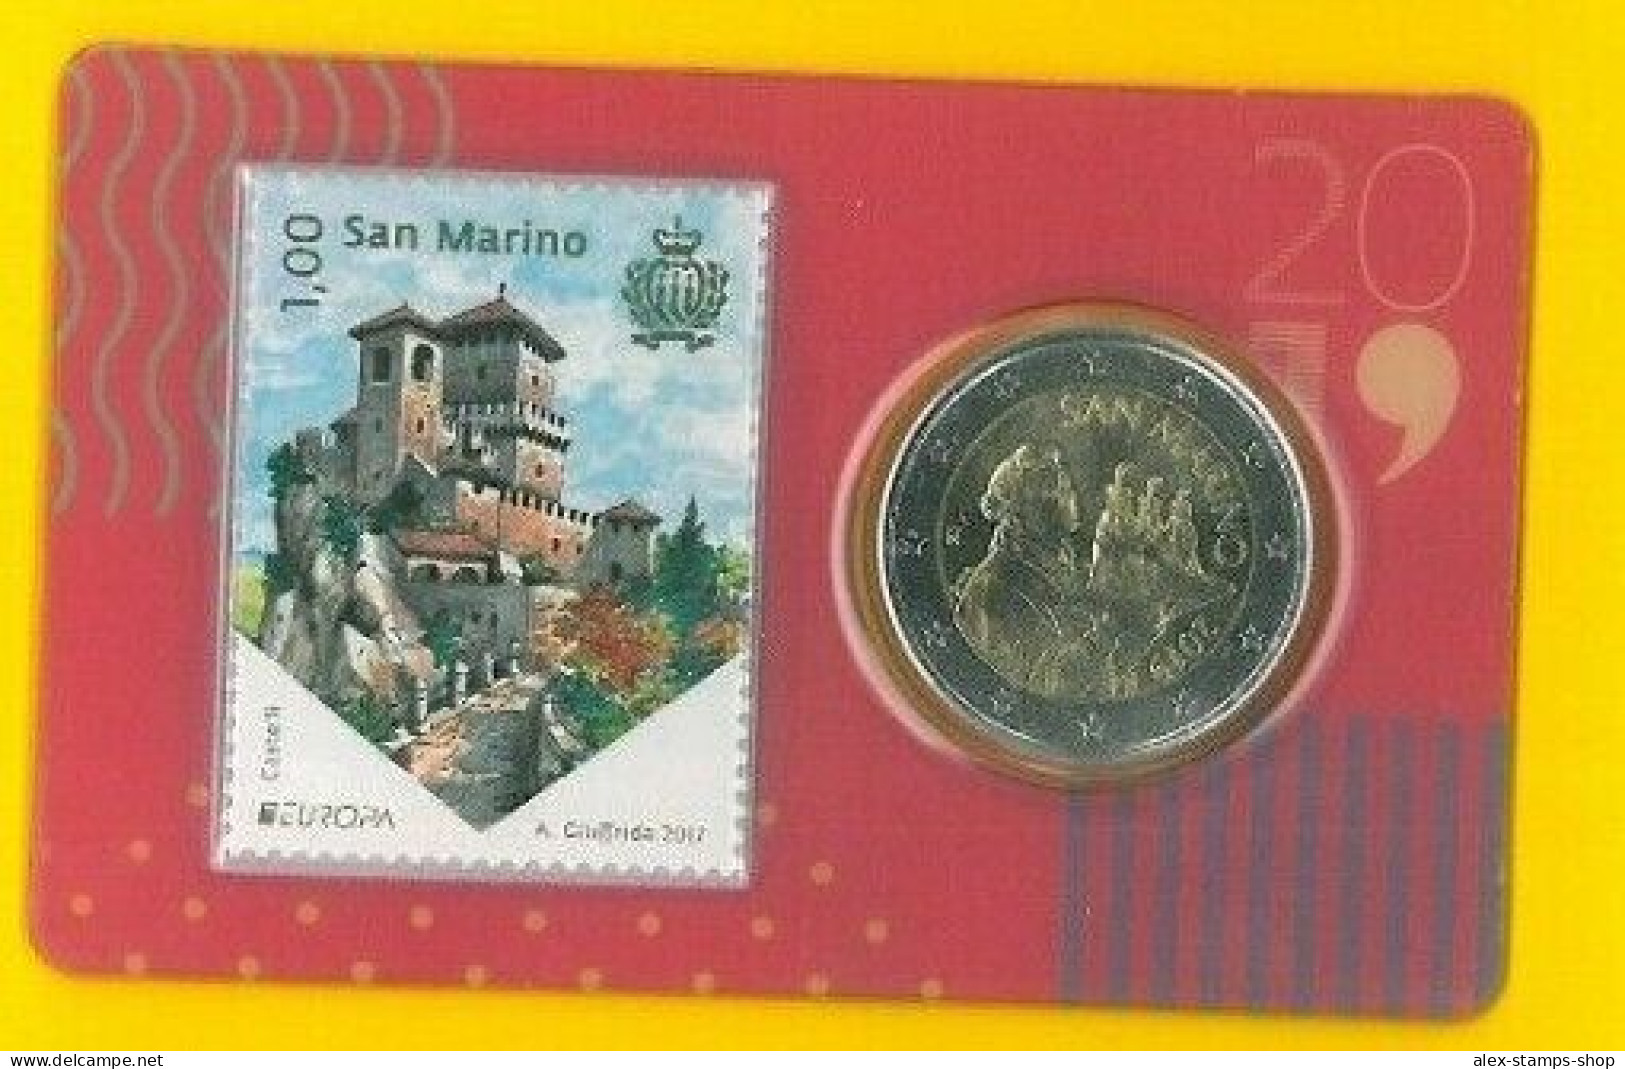 SAN MARINO 2019 STAMP AND COIN CARD N.04 - 2019 FRANCOBOLLO + MONETA 2 EURO - Unused Stamps